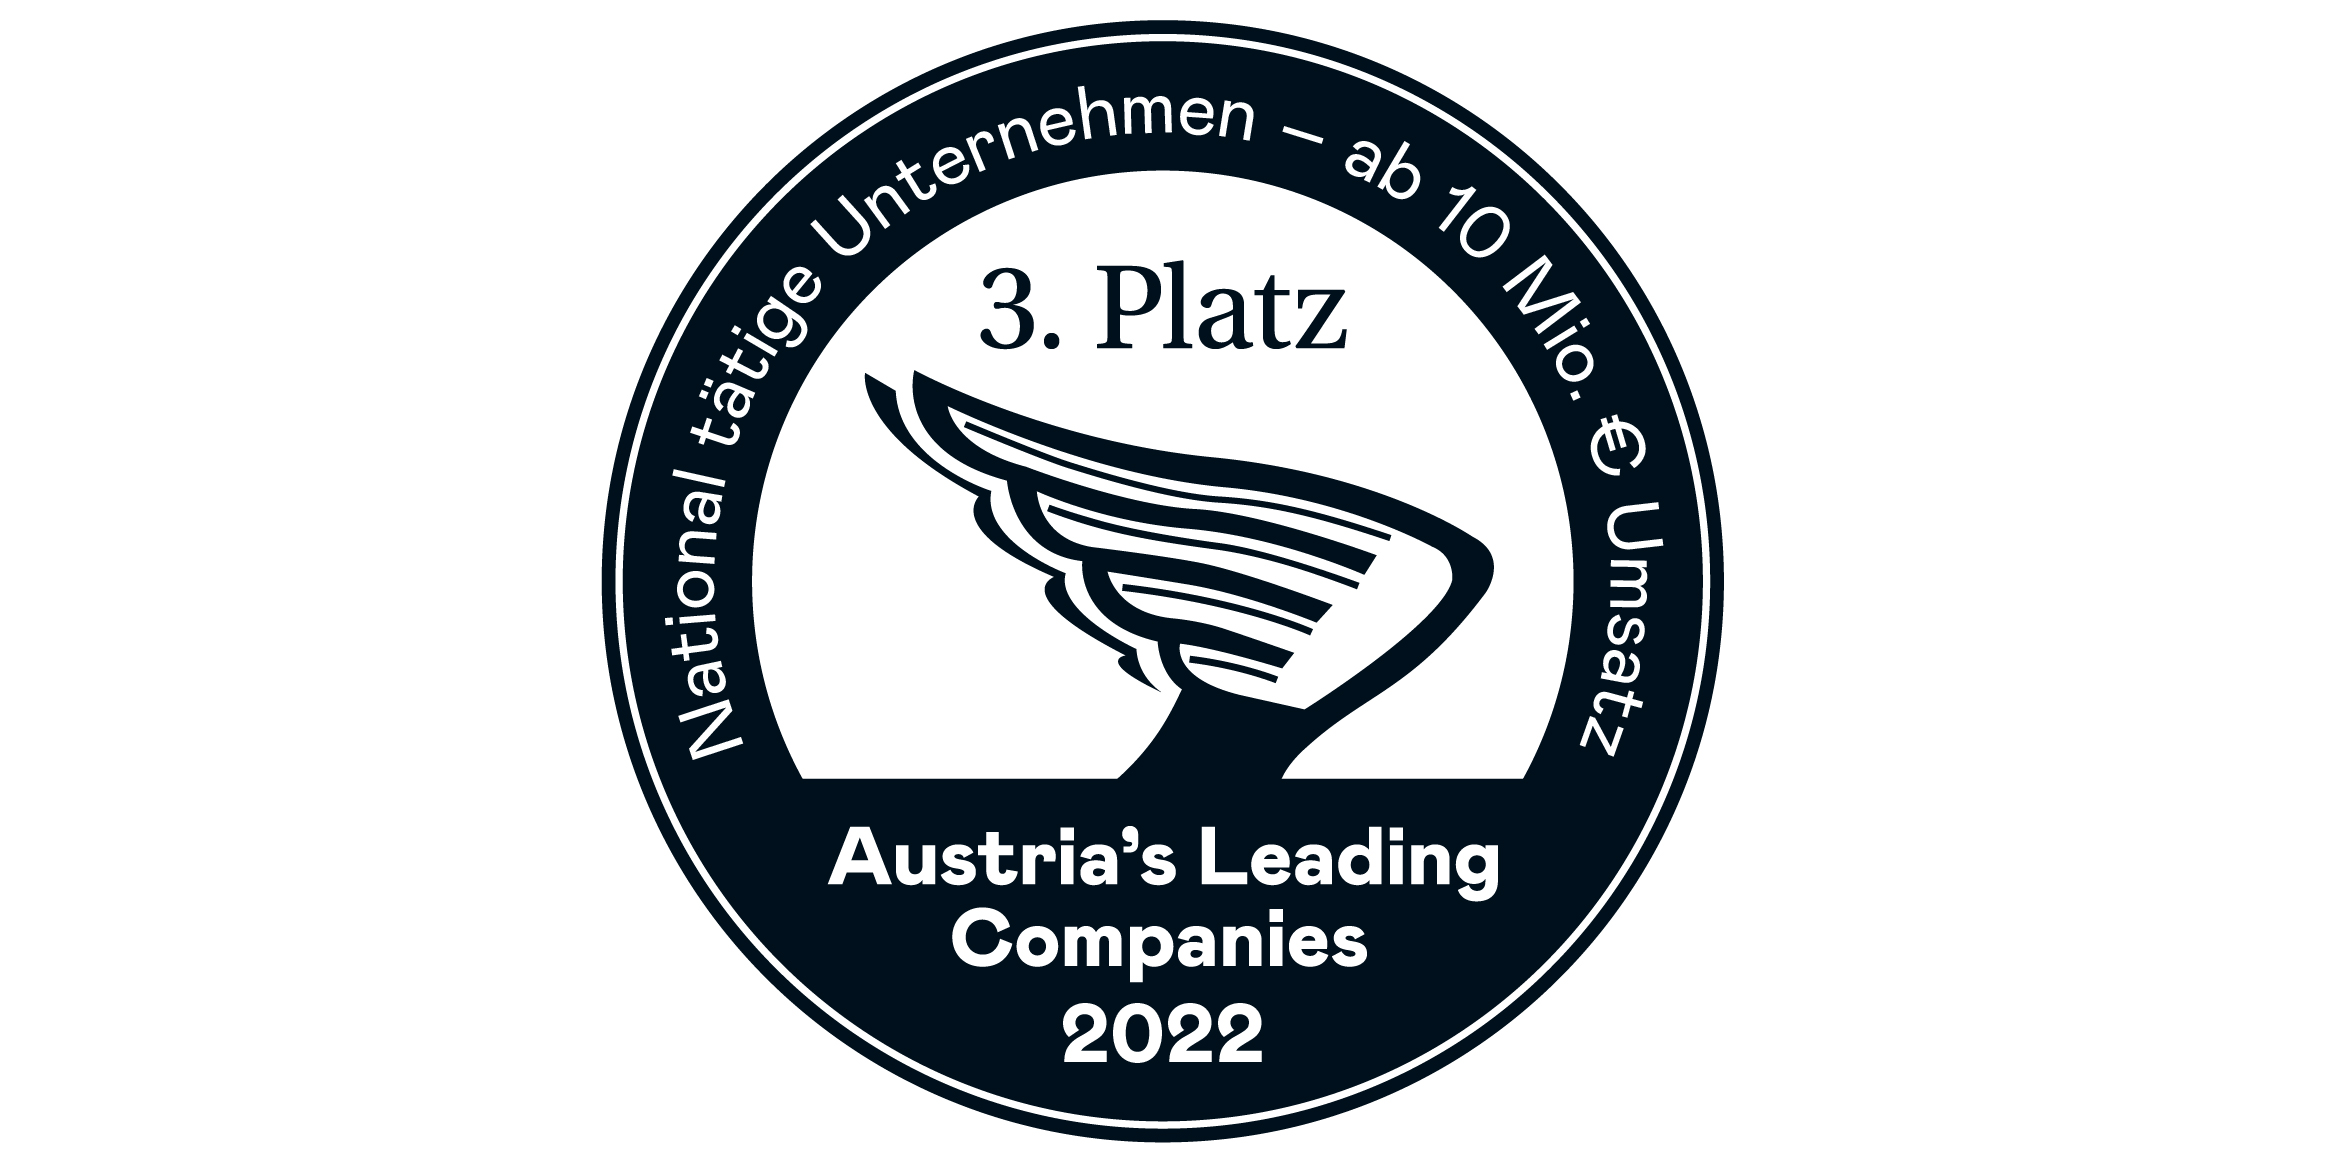 Austria's Leading Companies 2022